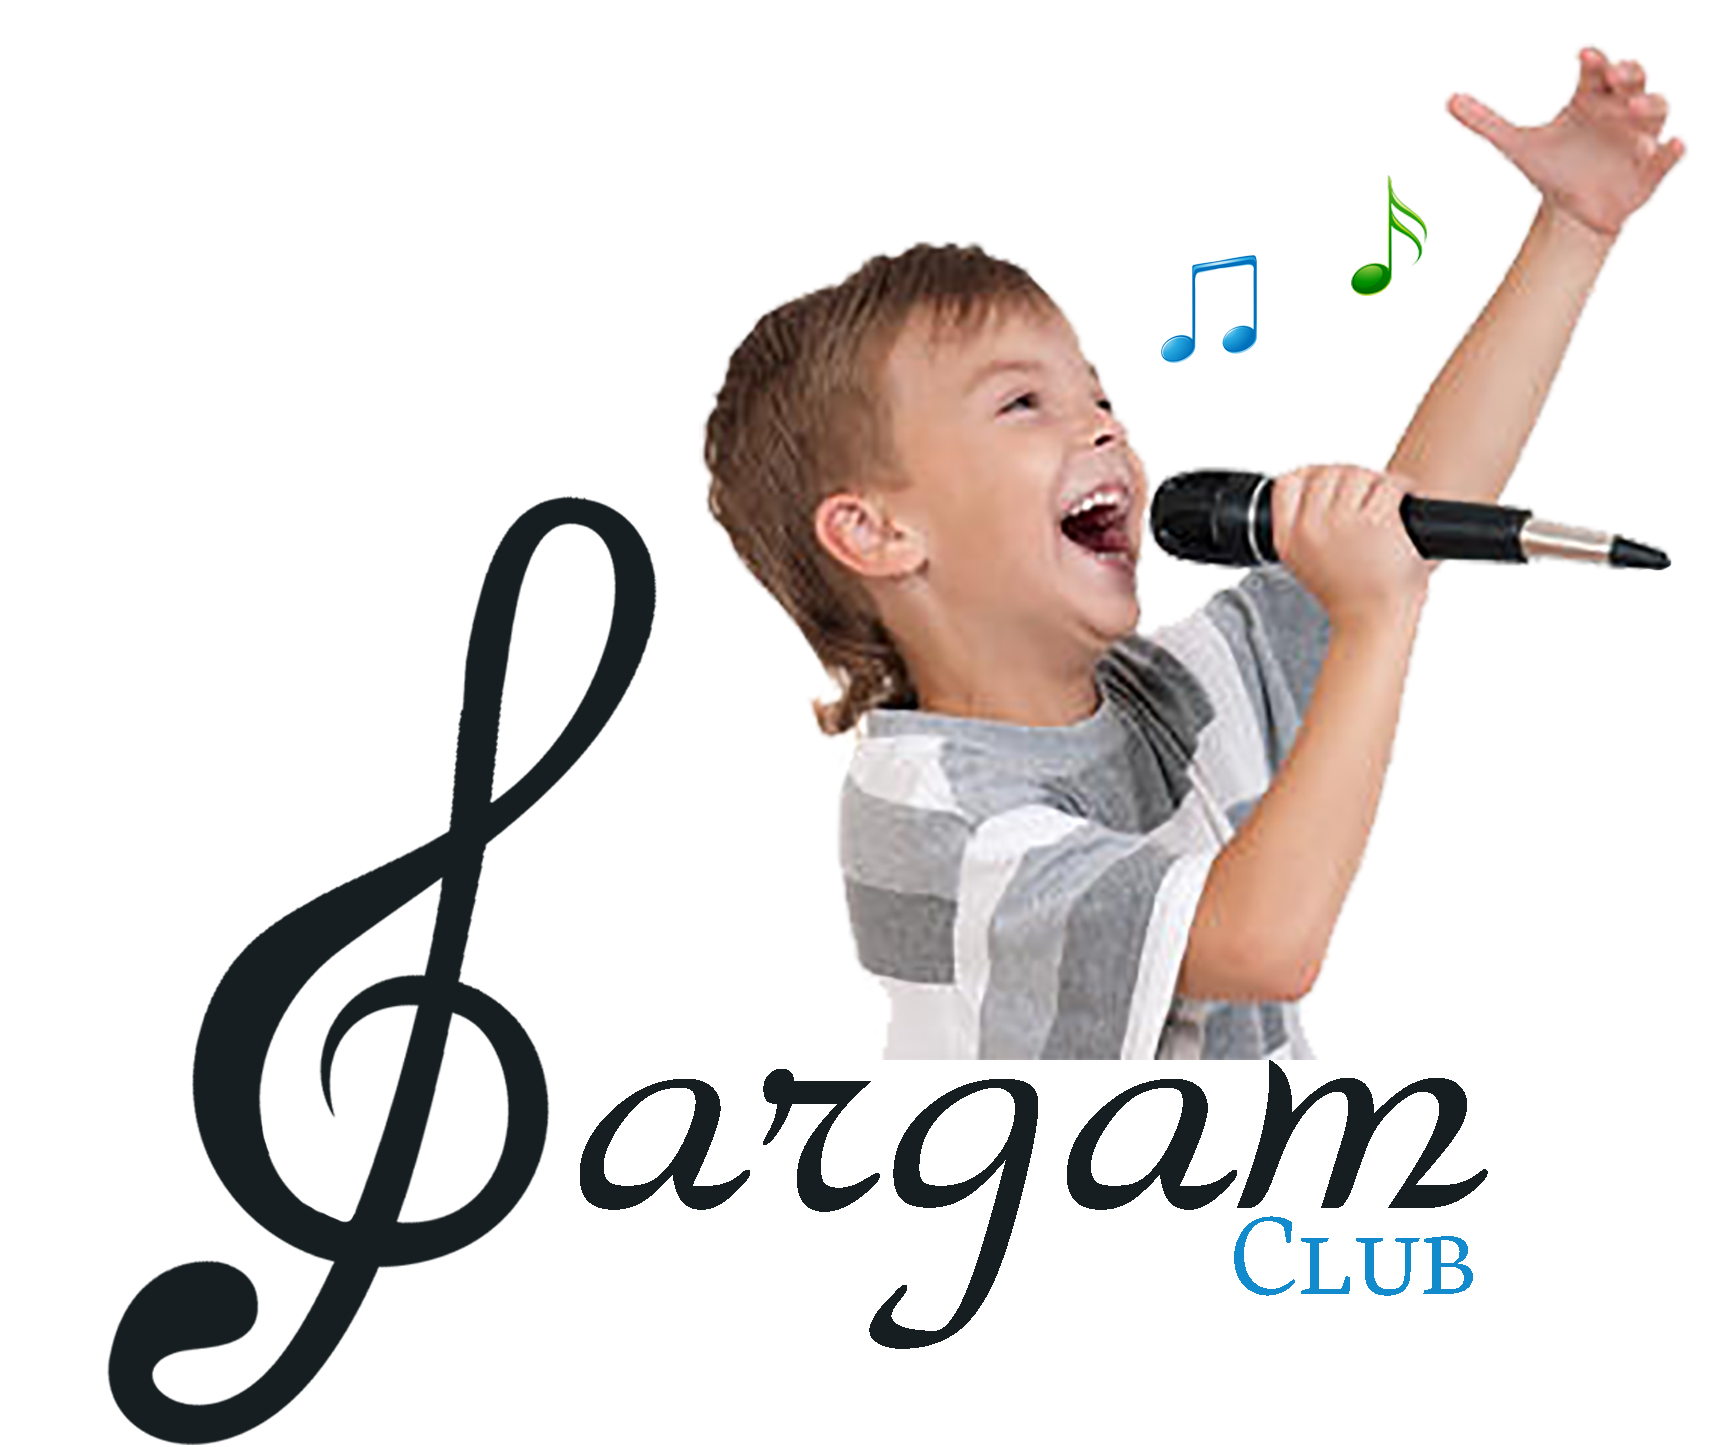 2Sargam_Clubs